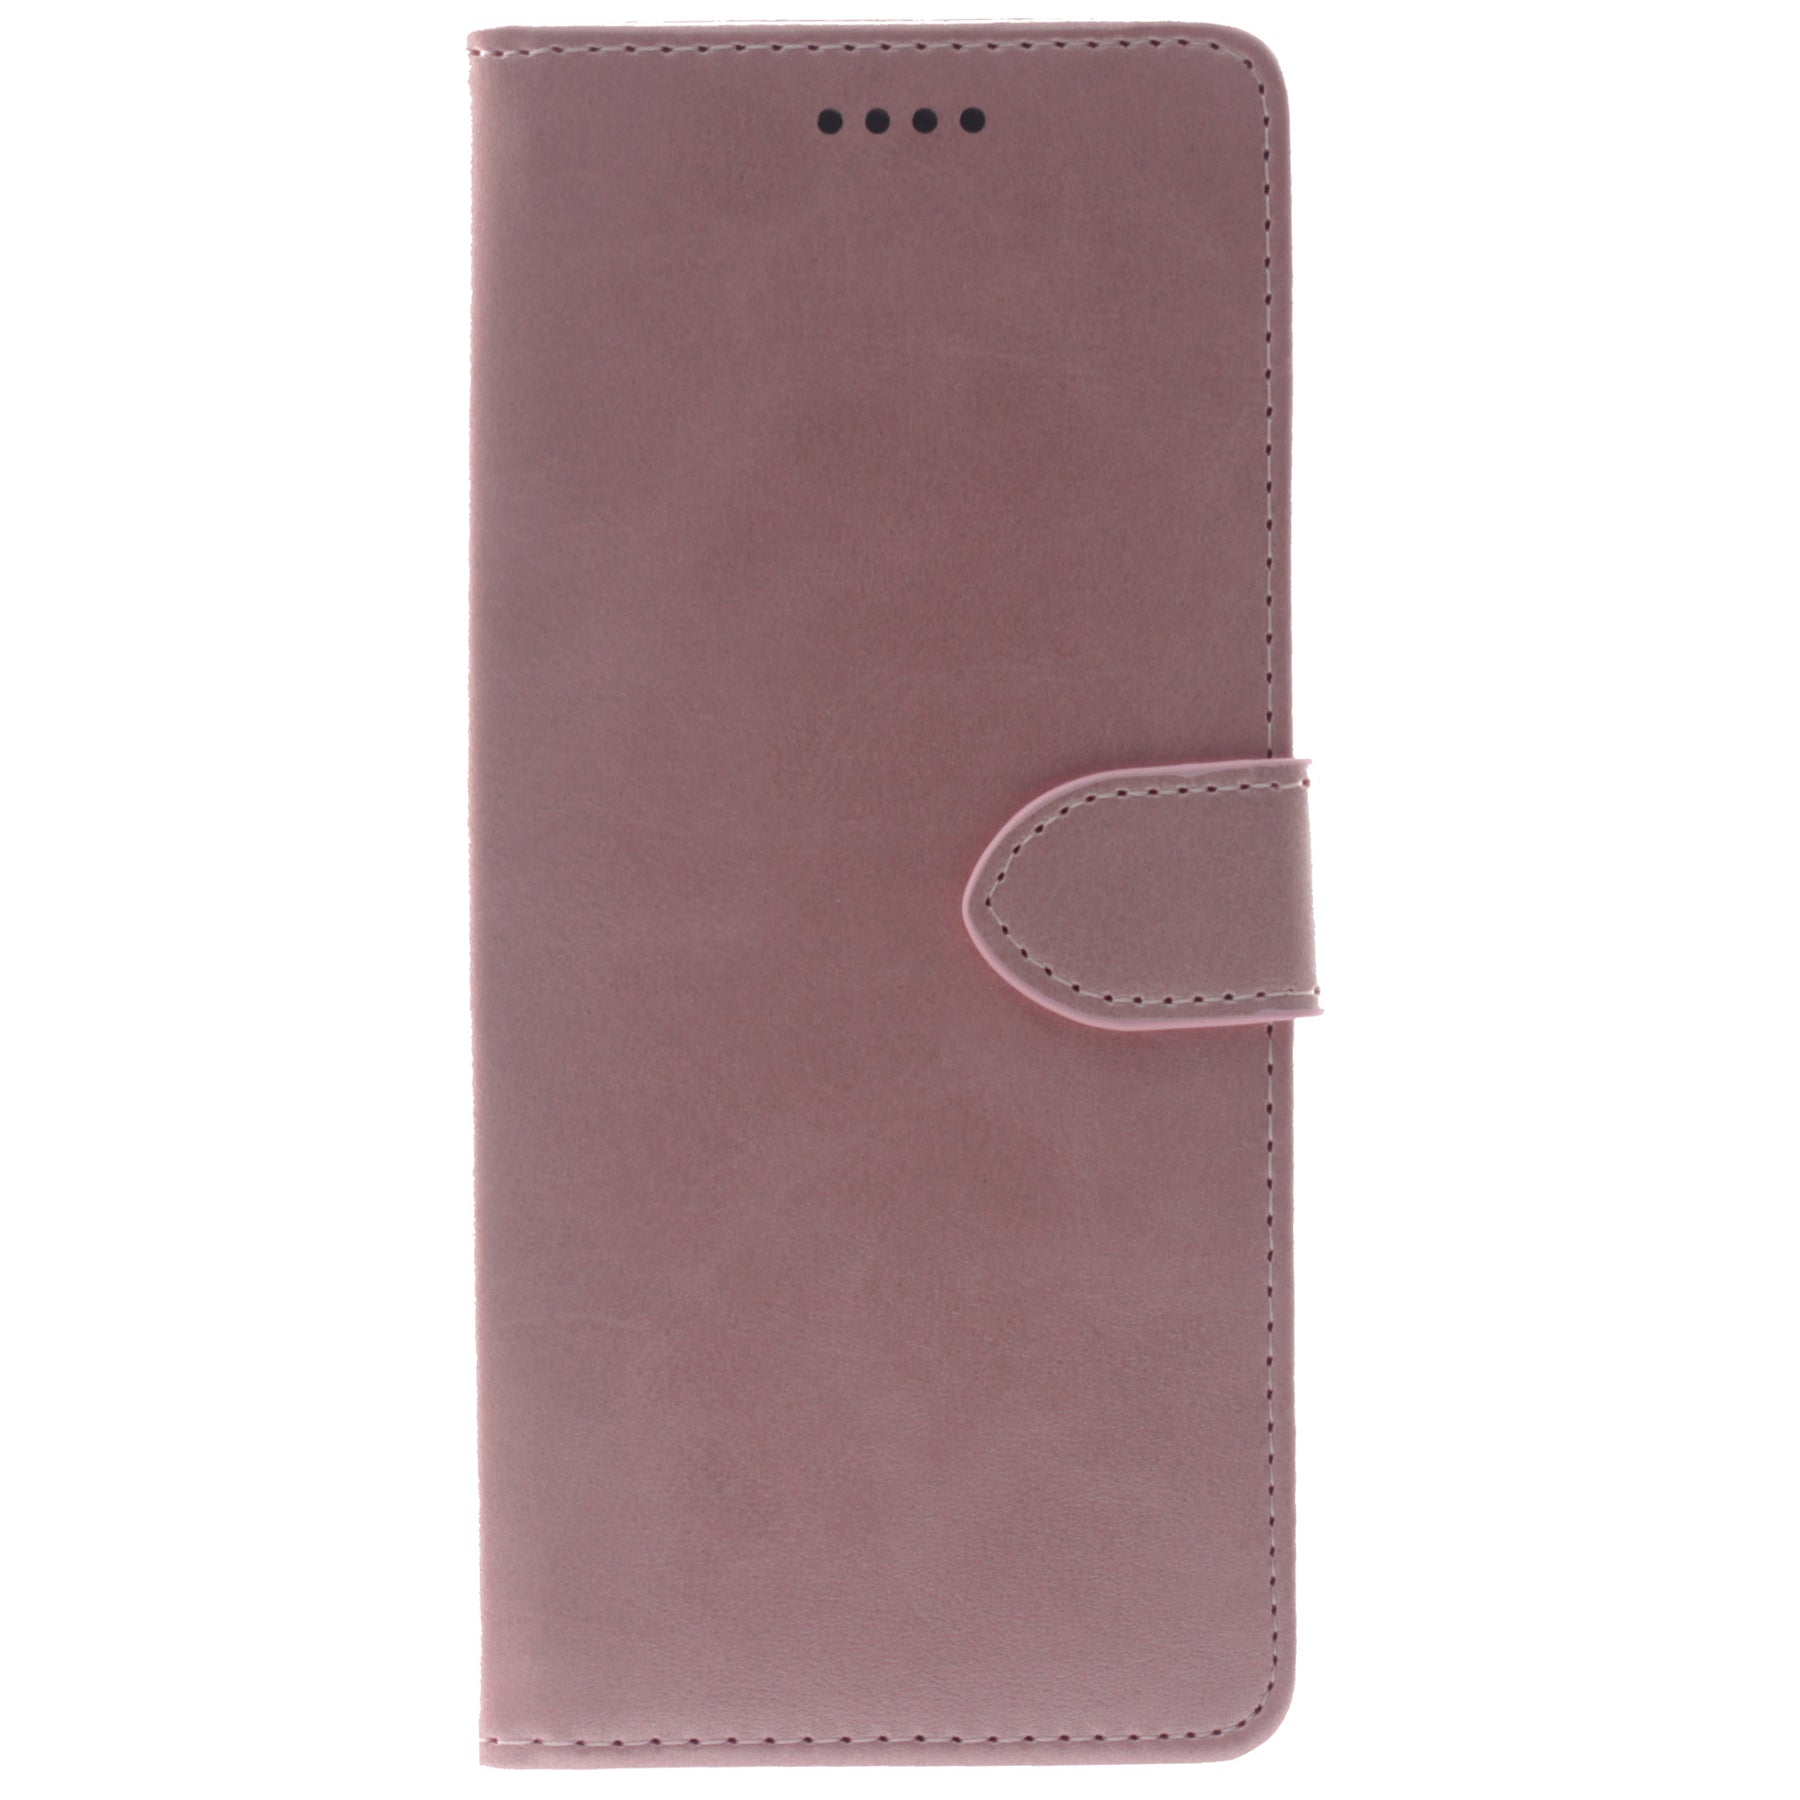 Nokia 6.2/7.2 pink wallet case